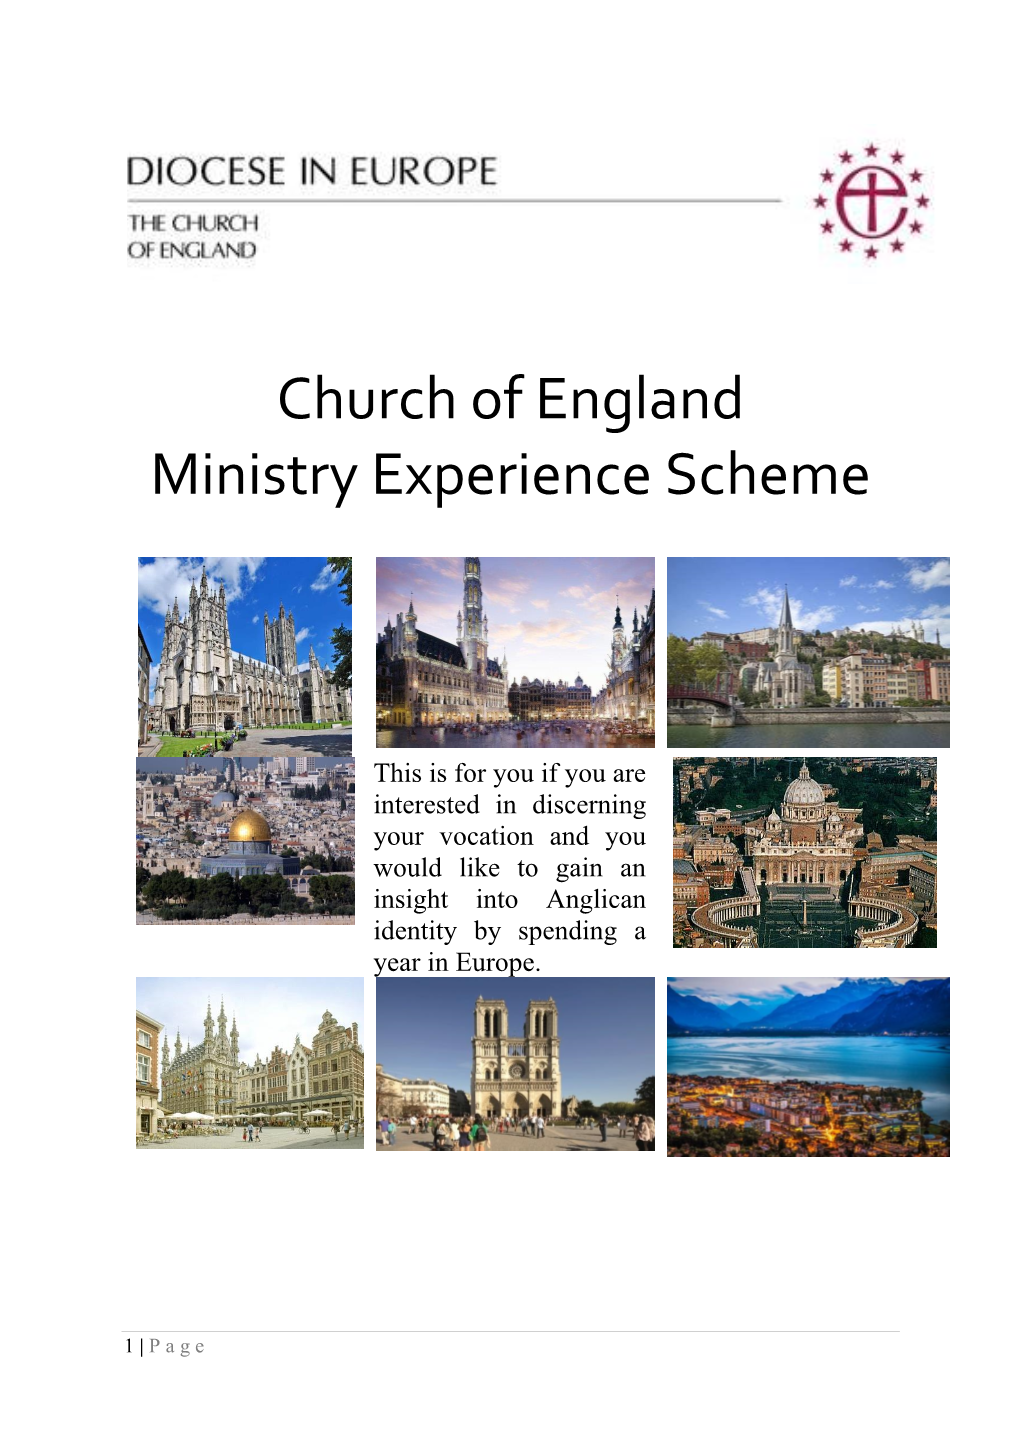 Church of England Gap Year Scheme